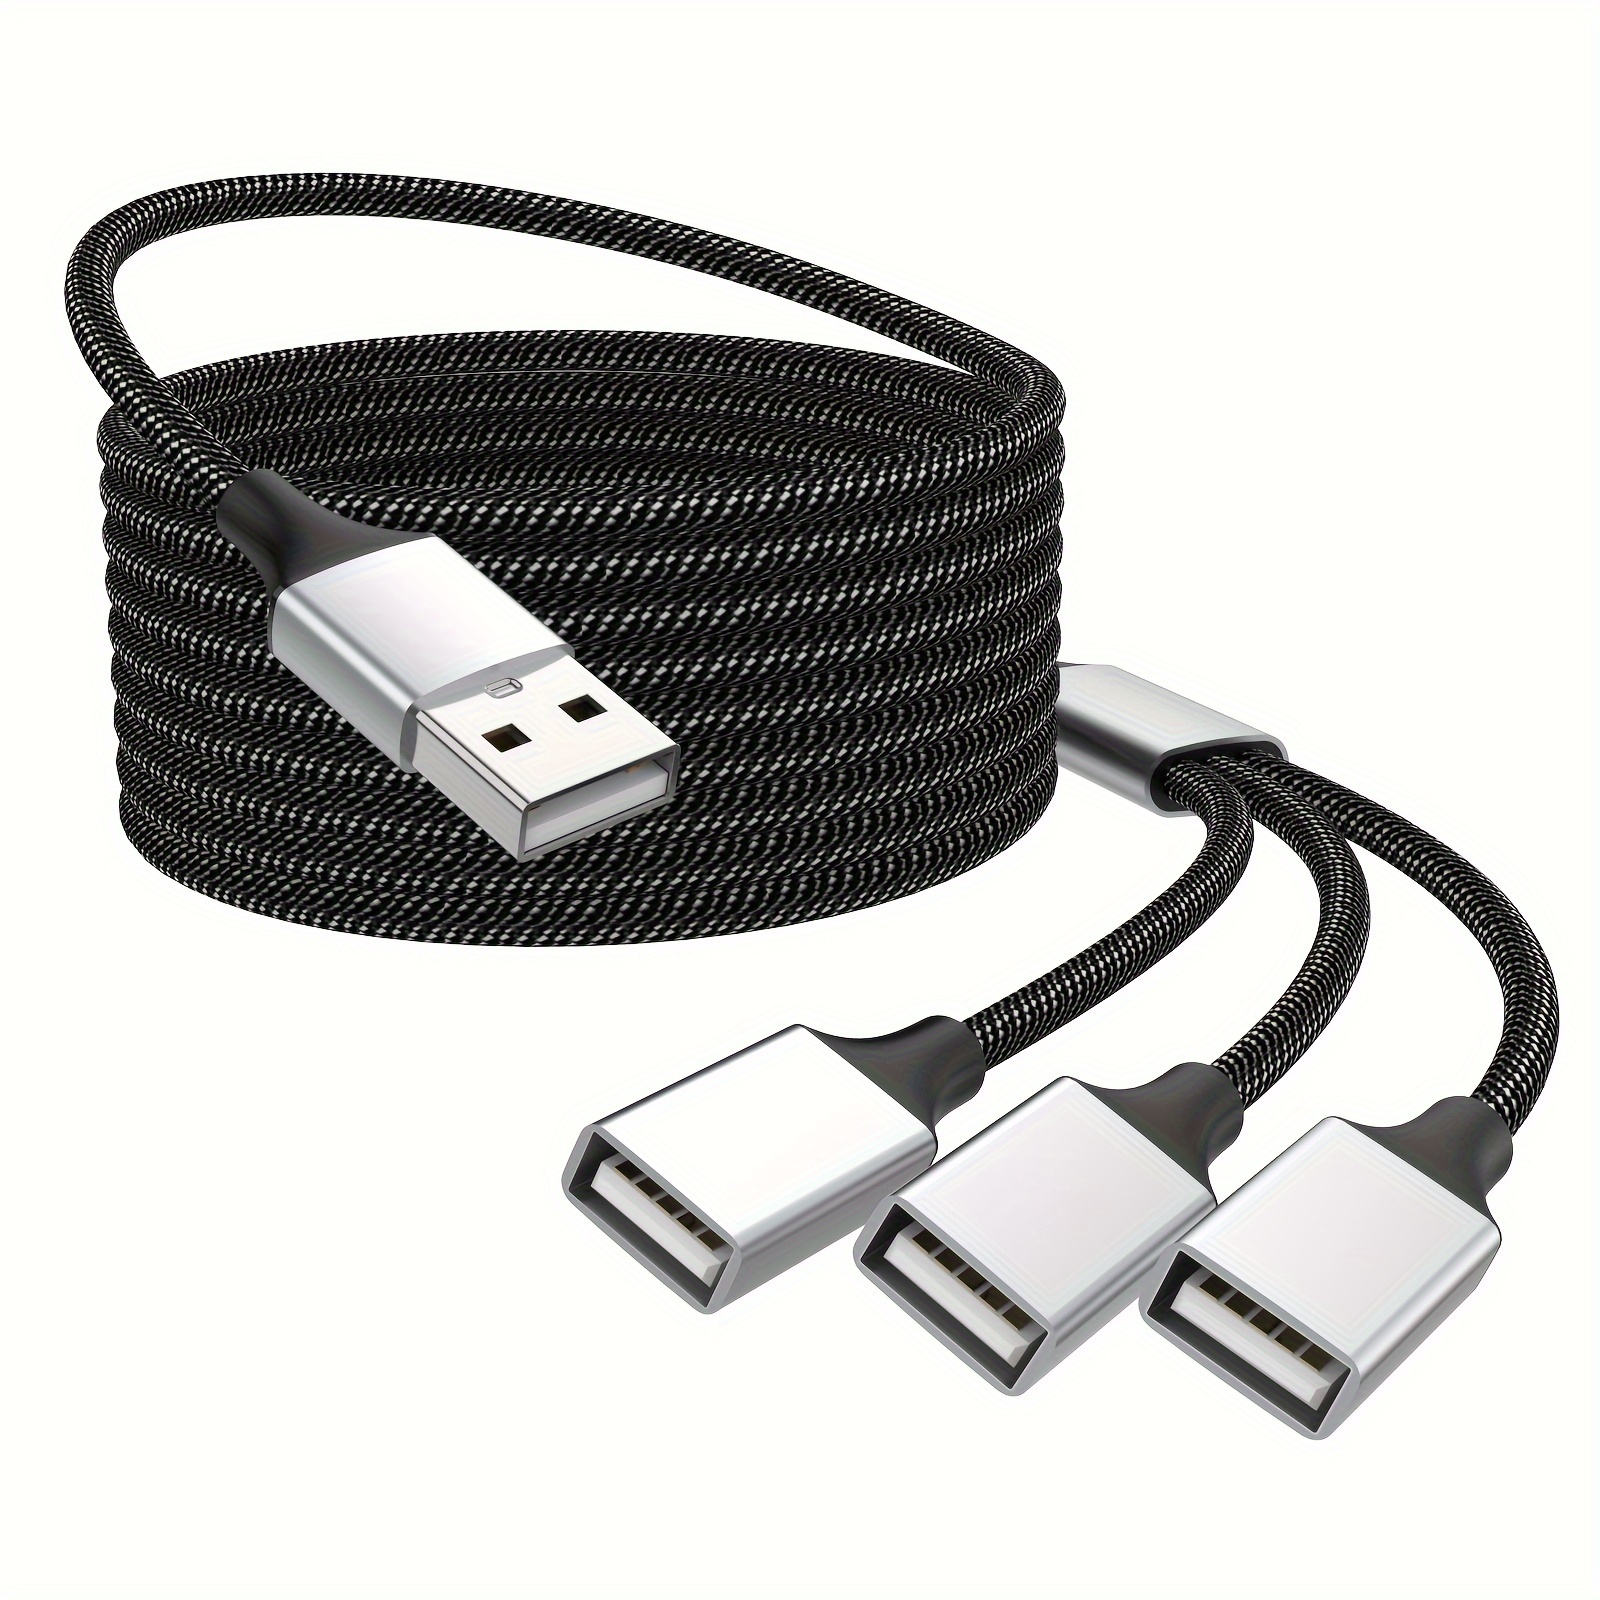 4-Port USB 3.0 Hub Long Cable 4ft